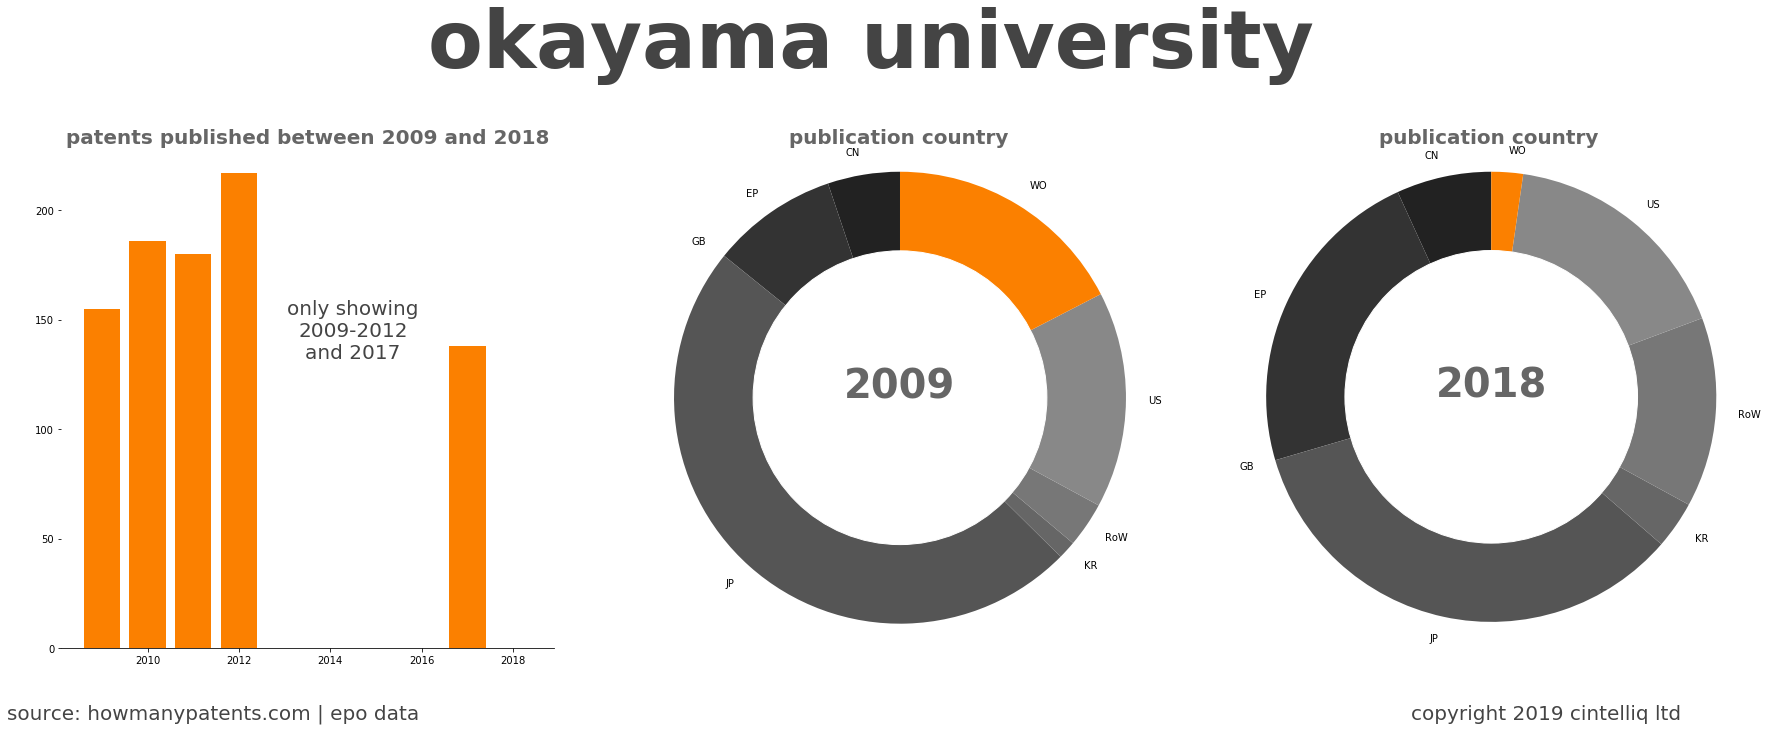 summary of patents for Okayama University